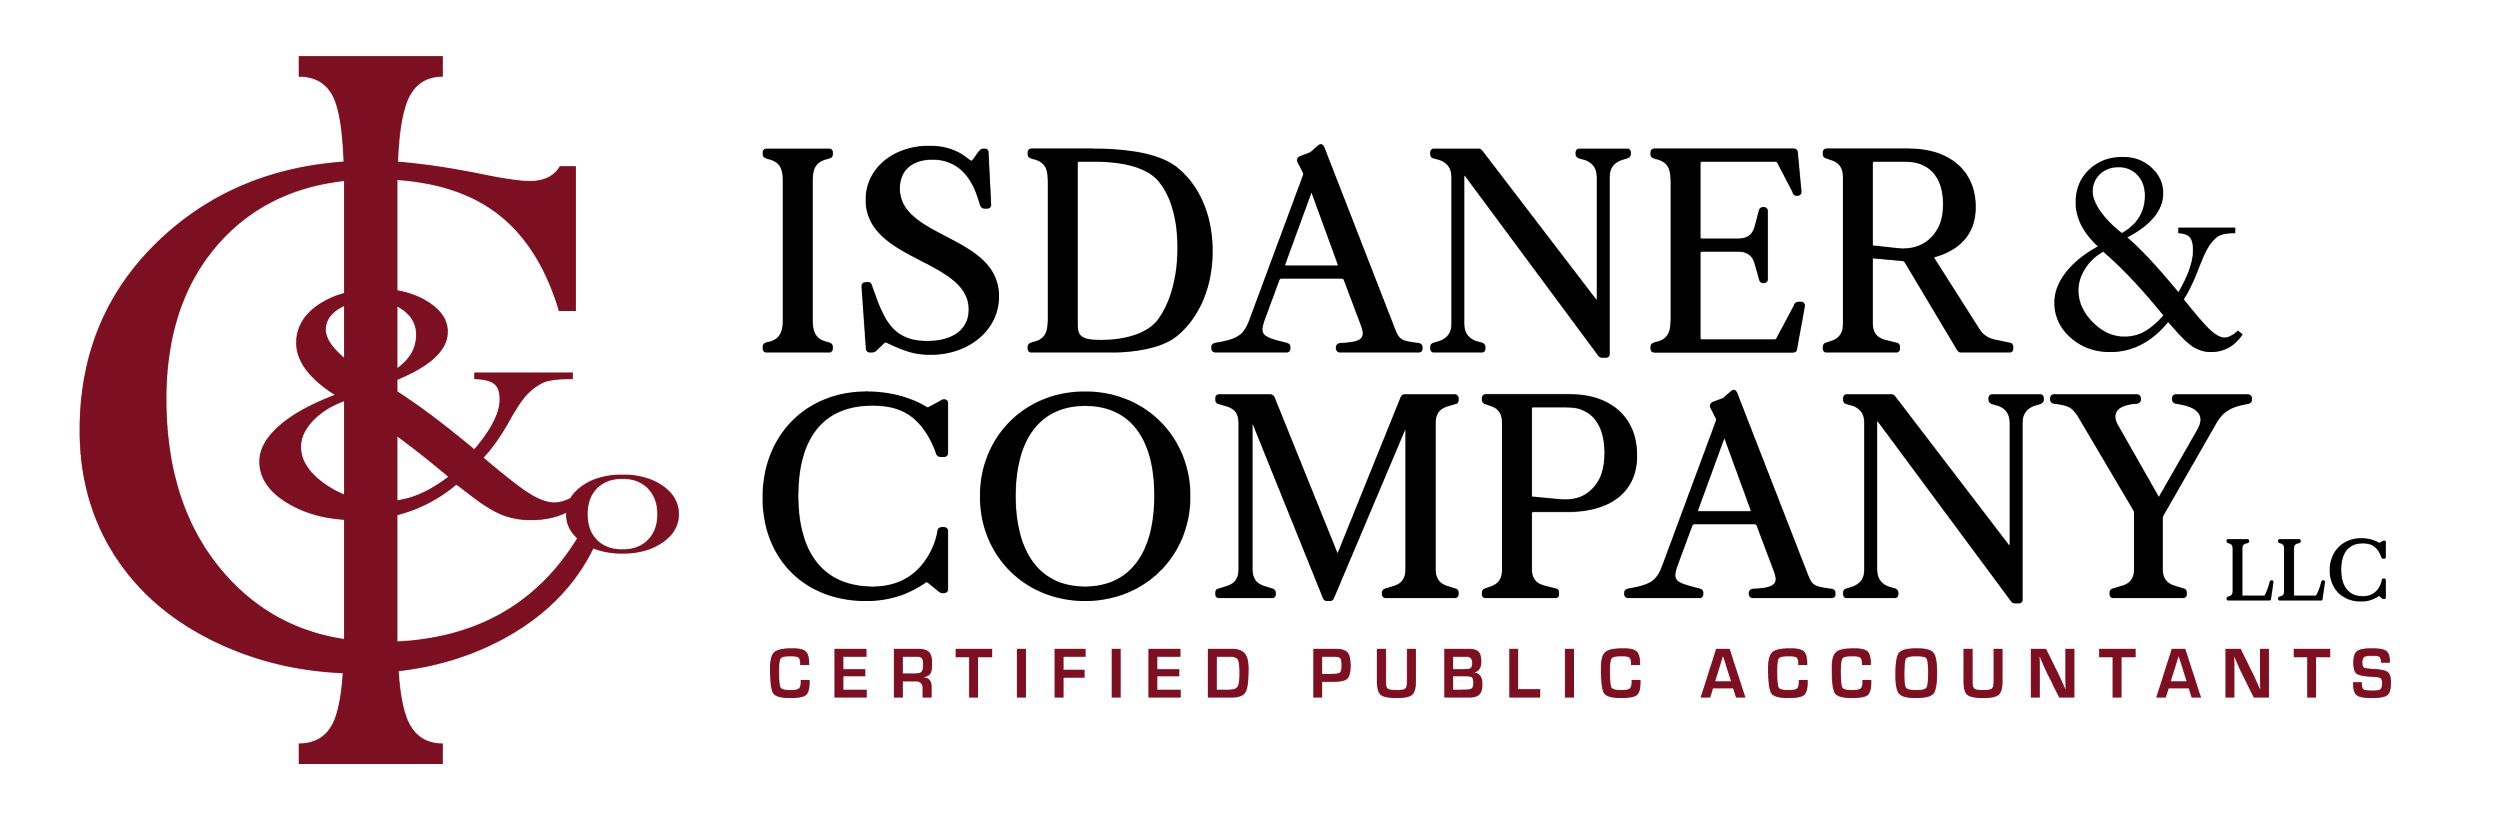 Isdaner & Co logo